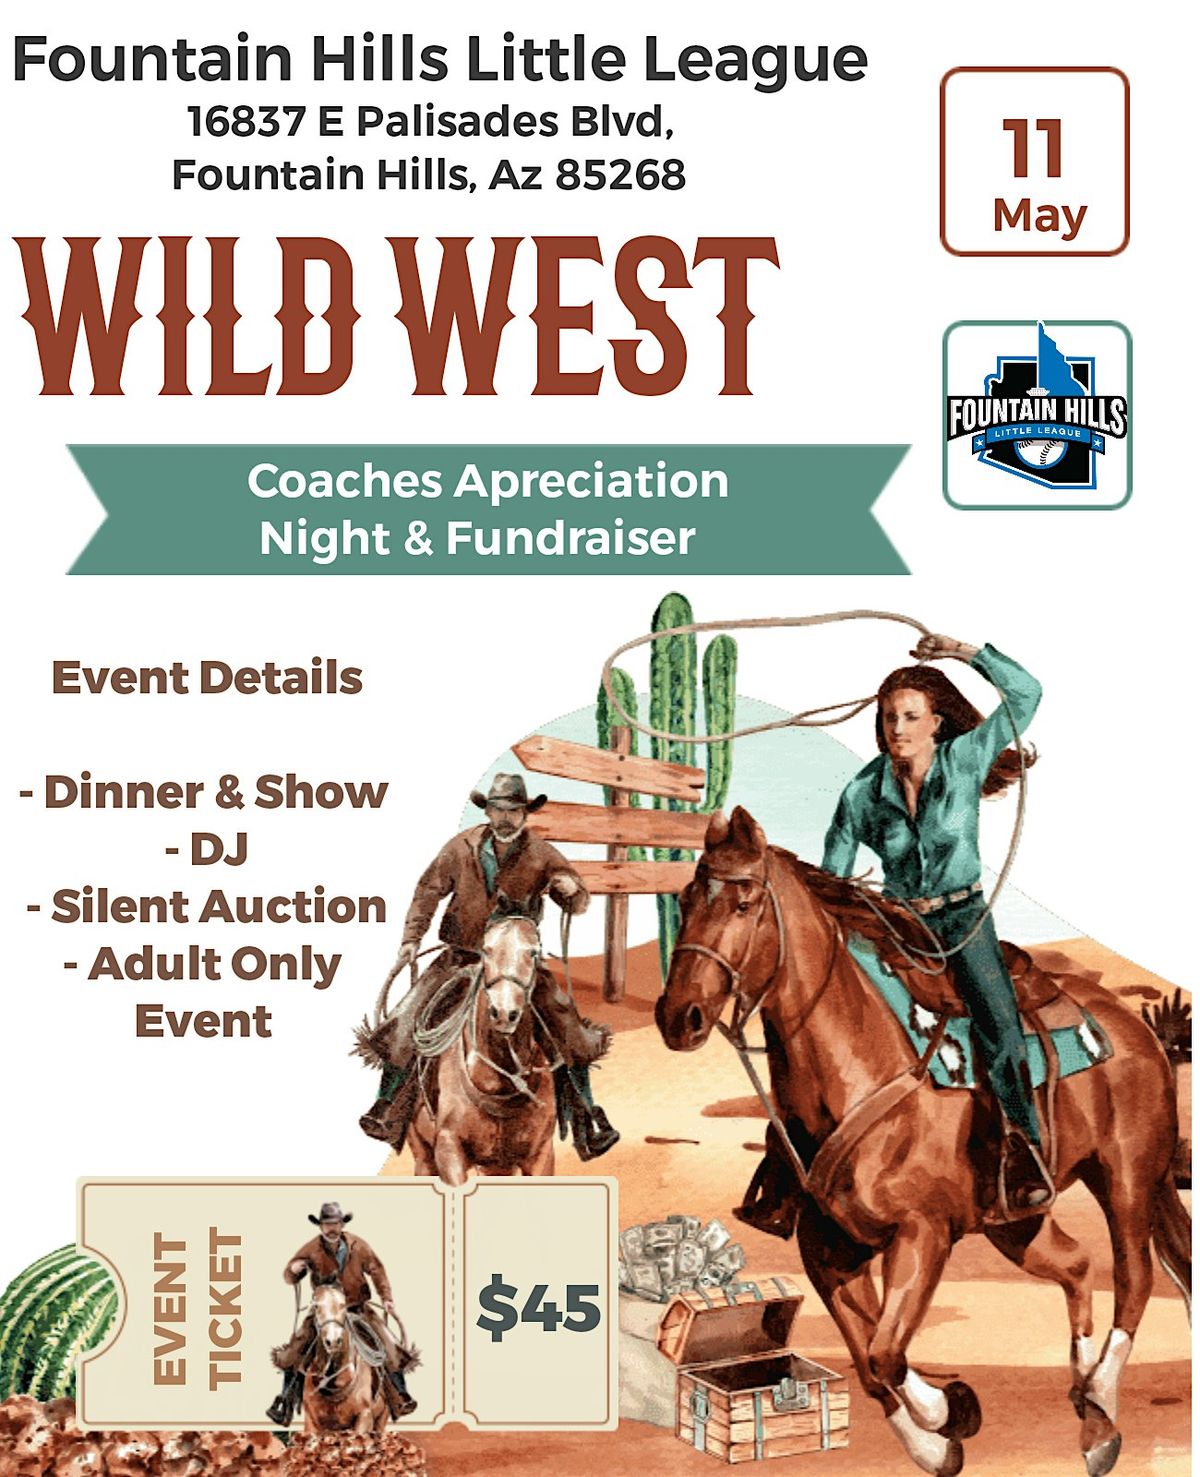 Fountain Hills Little League Wild West Coaches Appreciation Night & Fundraiser